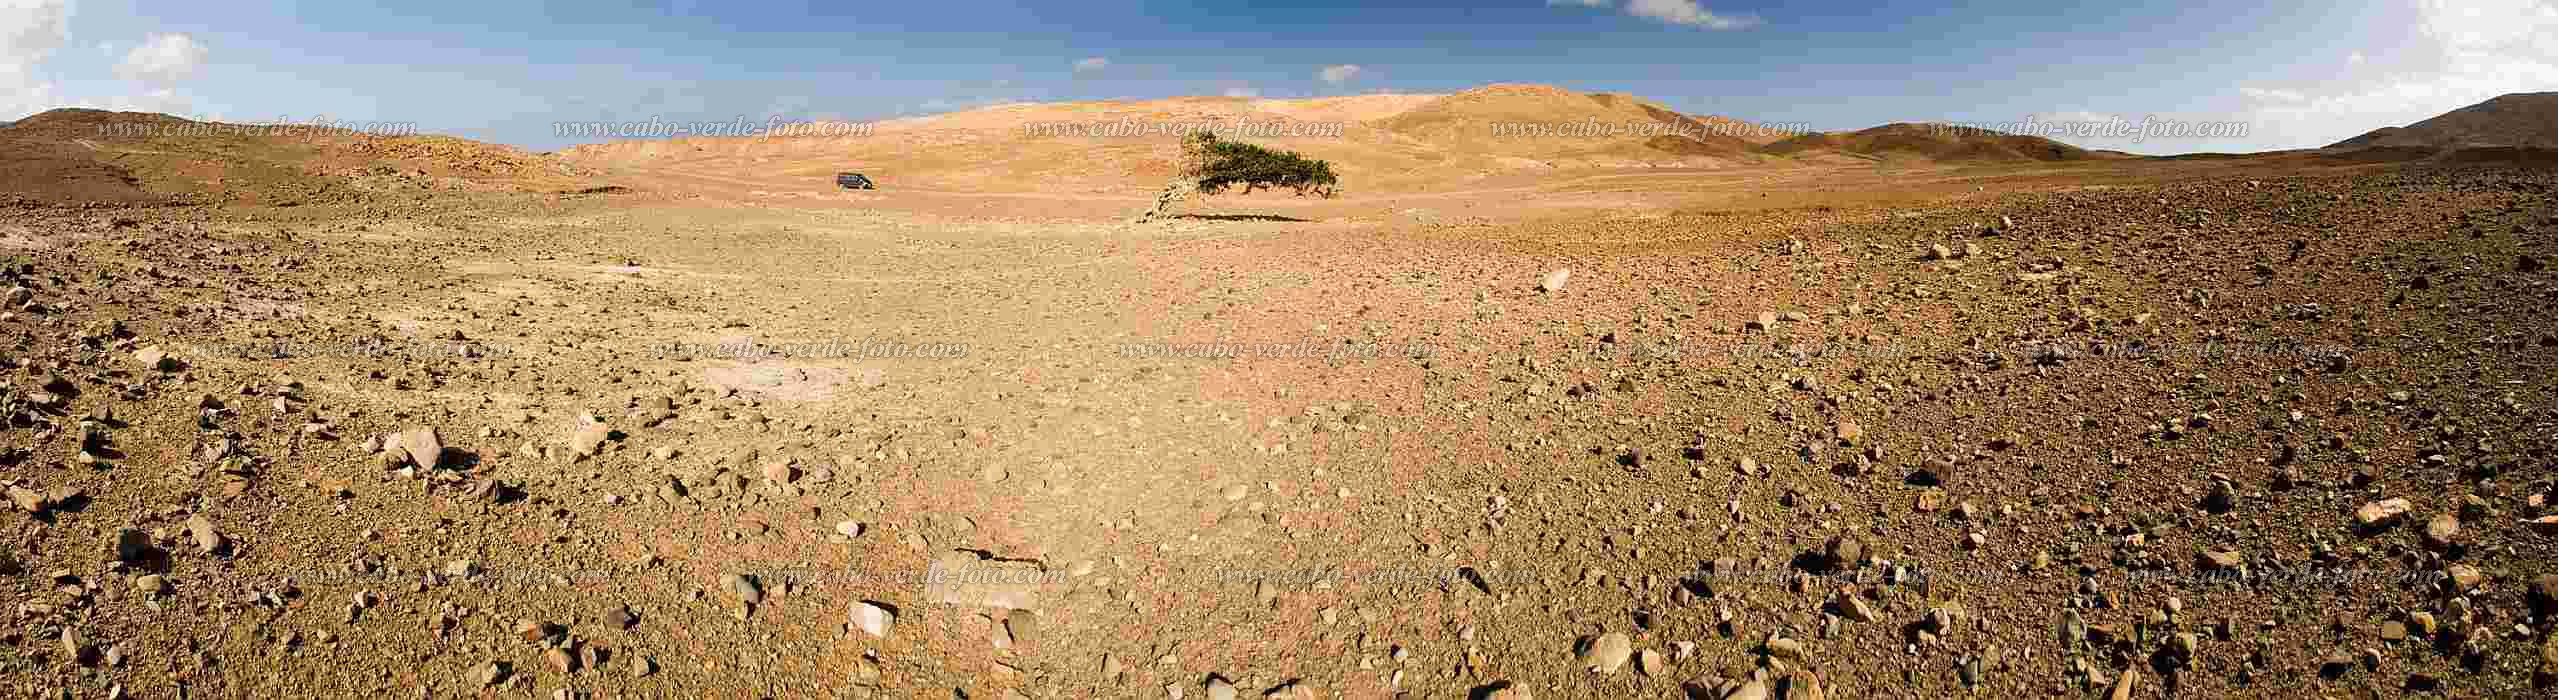 Insel: Maio  Wanderweg:  Ort:  Motiv: Der Baum Motivgruppe: Landscape Desert © Florian Drmer www.Cabo-Verde-Foto.com